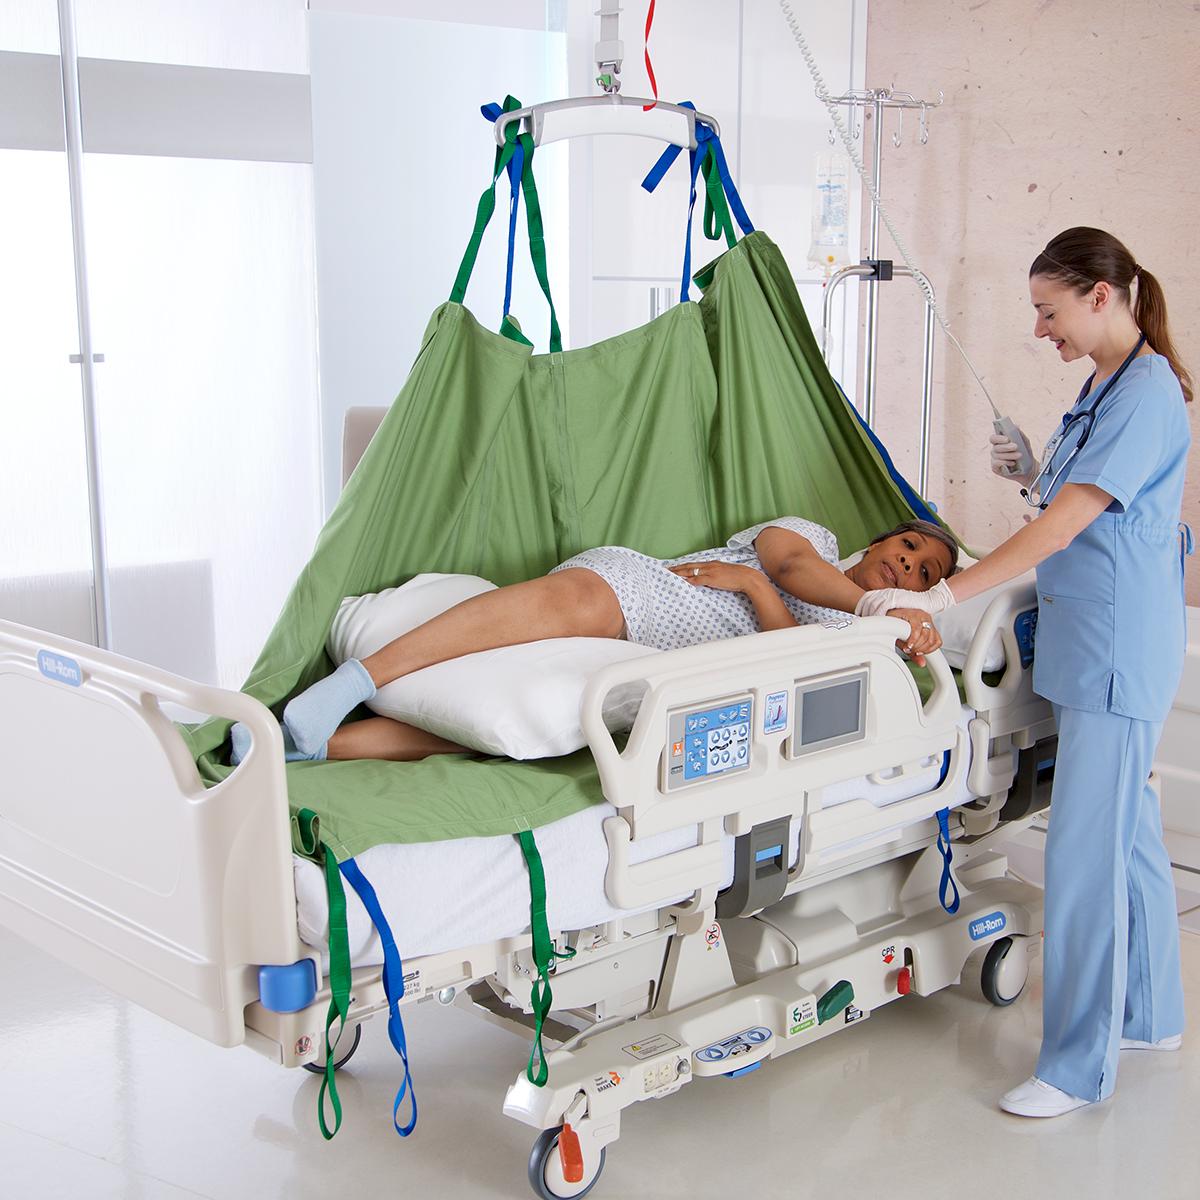 Hillrom 天井走行型リフトと Repo Sheet を使用して、病院用ベッドで患者さんの体位変換を行う医師